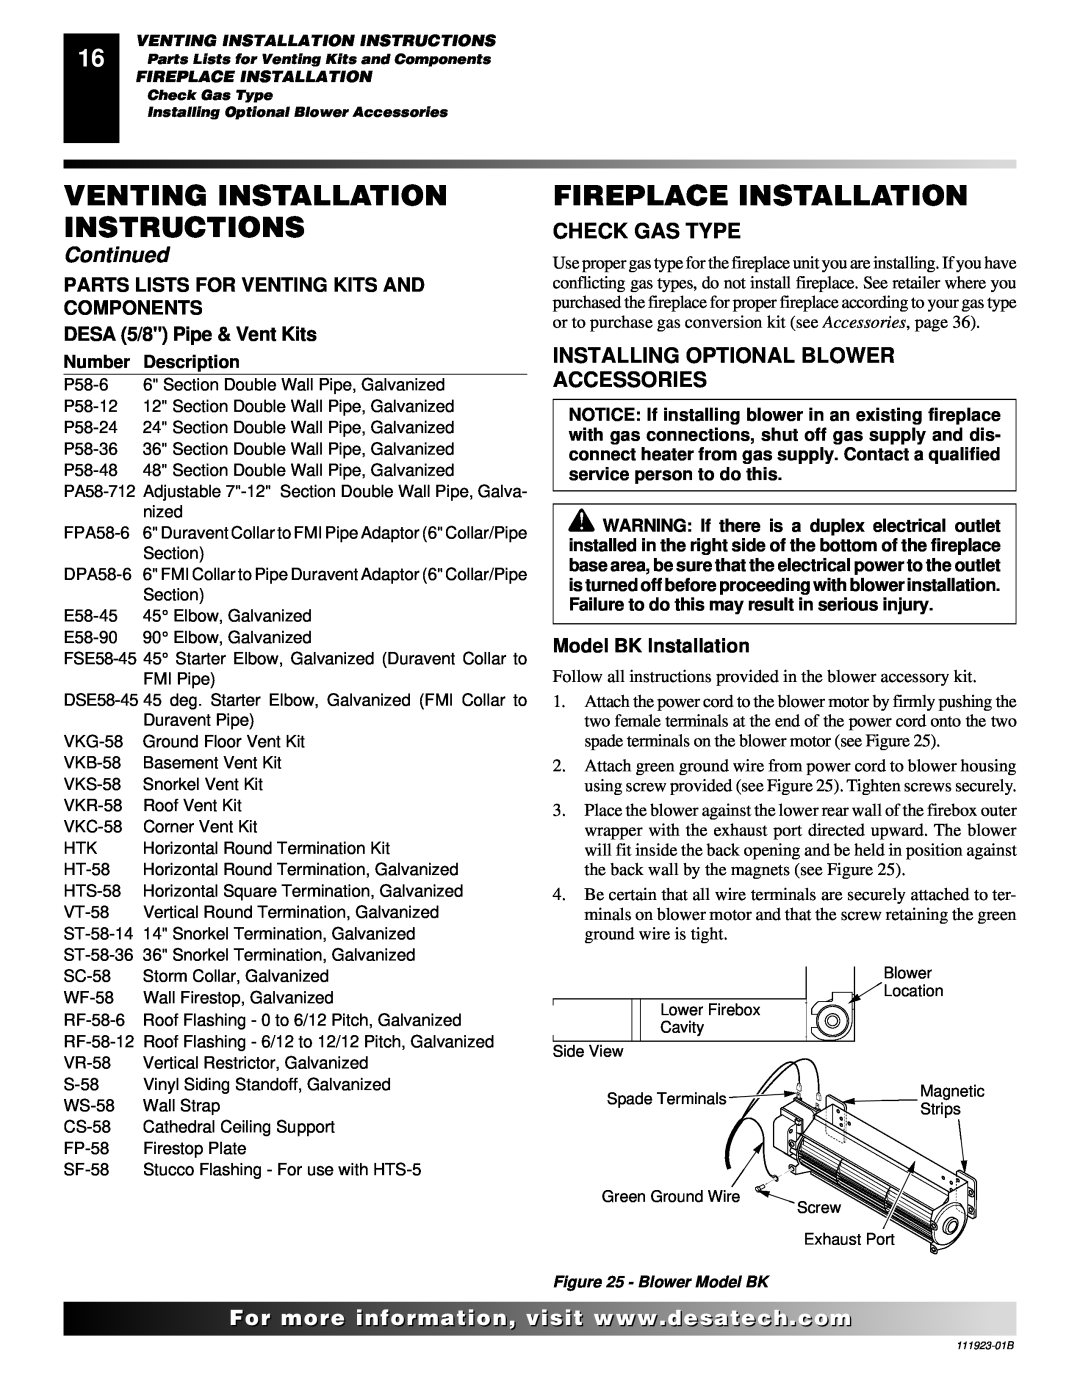 Desa (V)K36N SERIES Fireplace Installation, Check Gas Type, Installing Optional Blower Accessories, Model BK Installation 